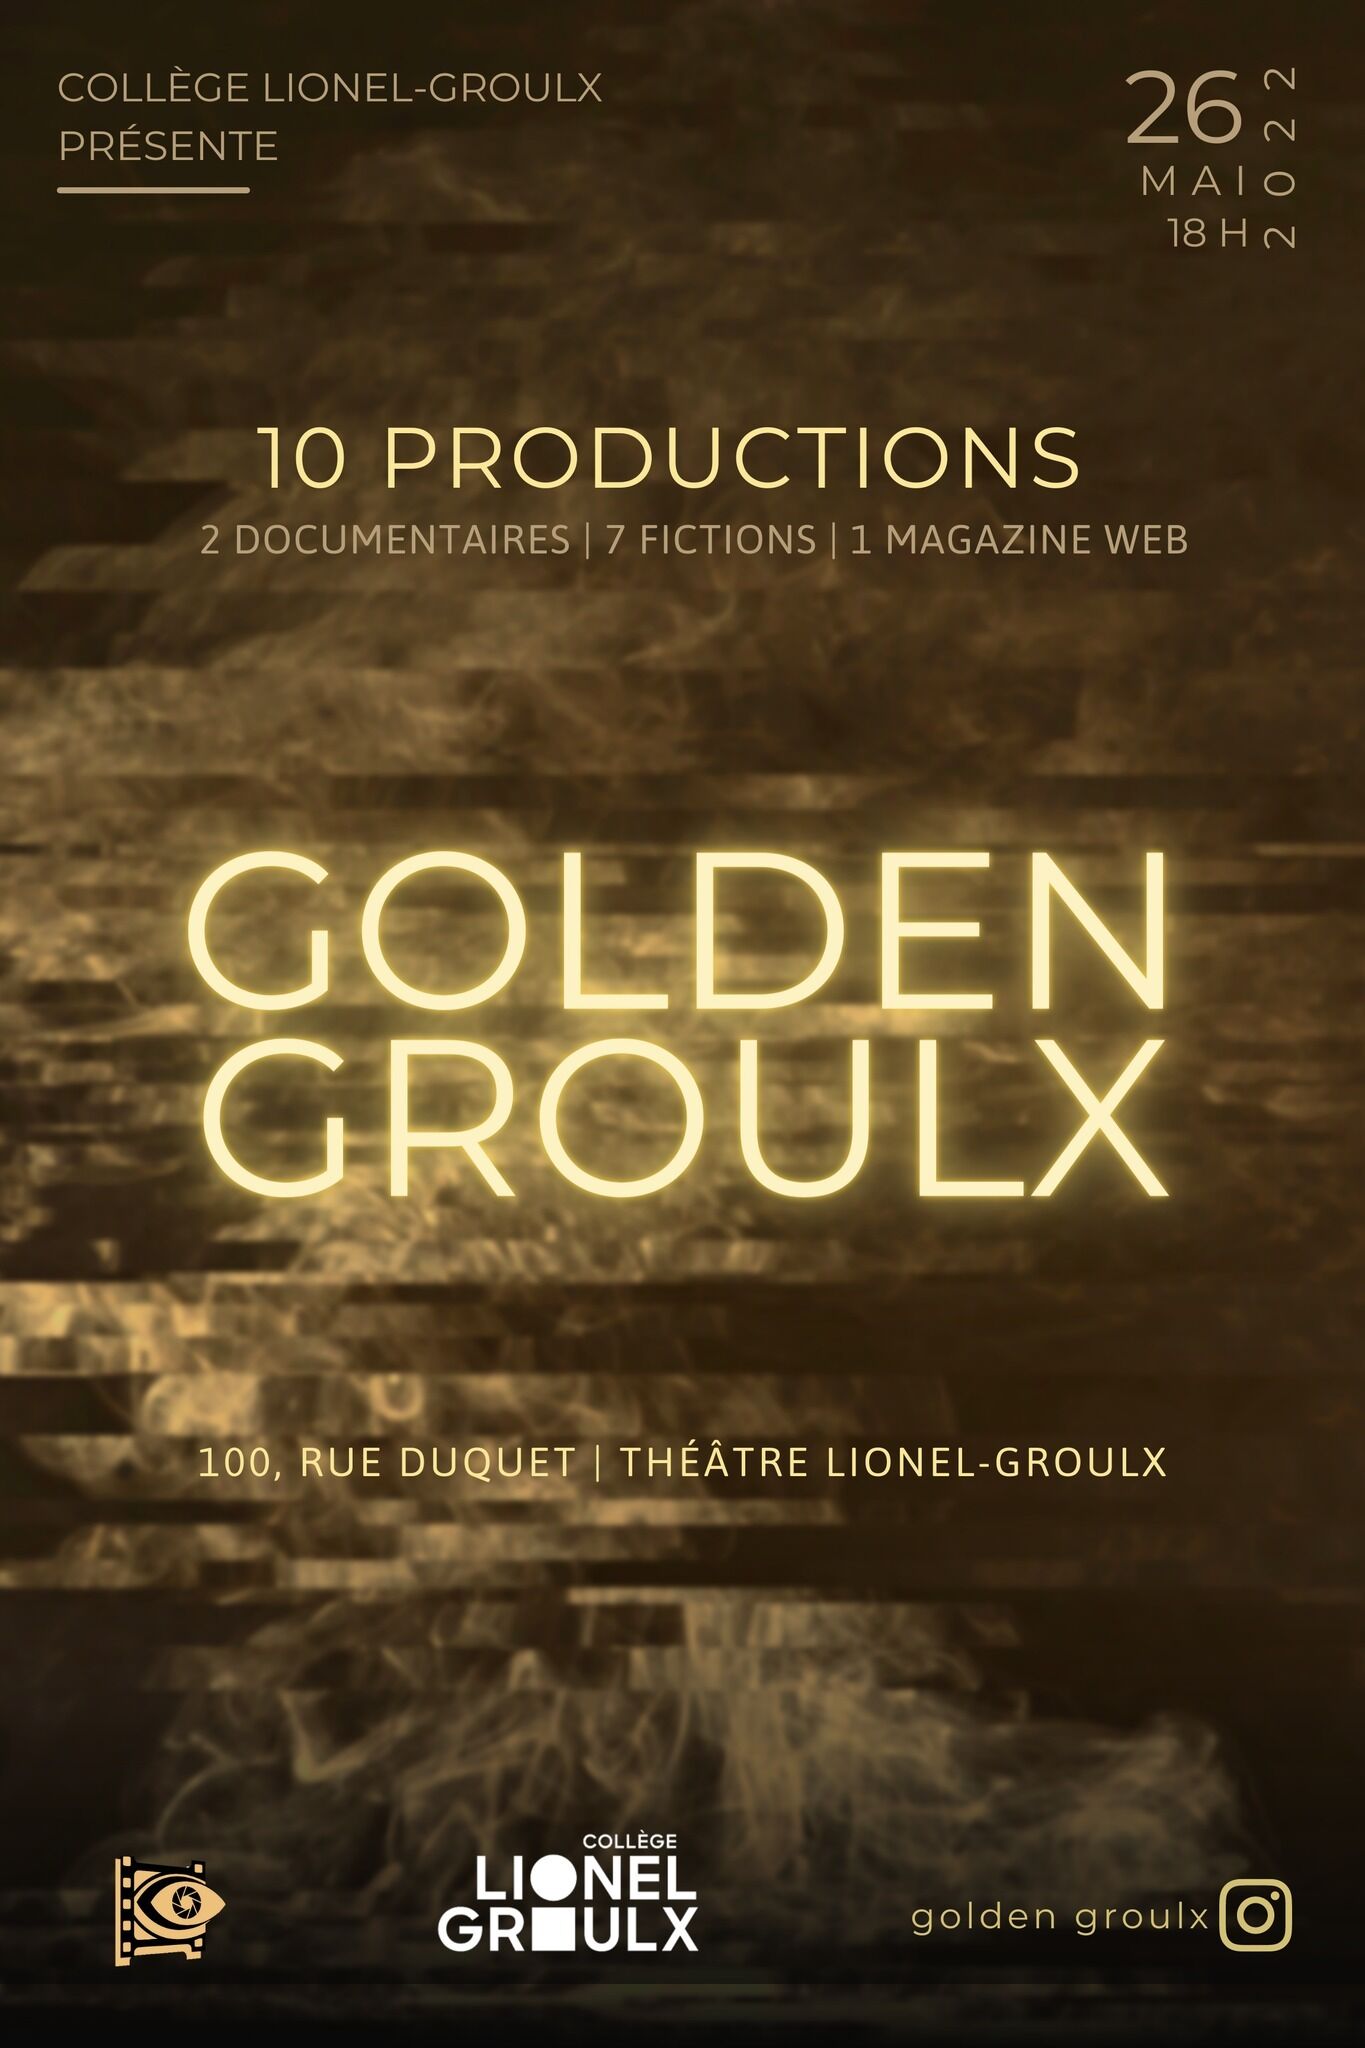 Golden Groulx